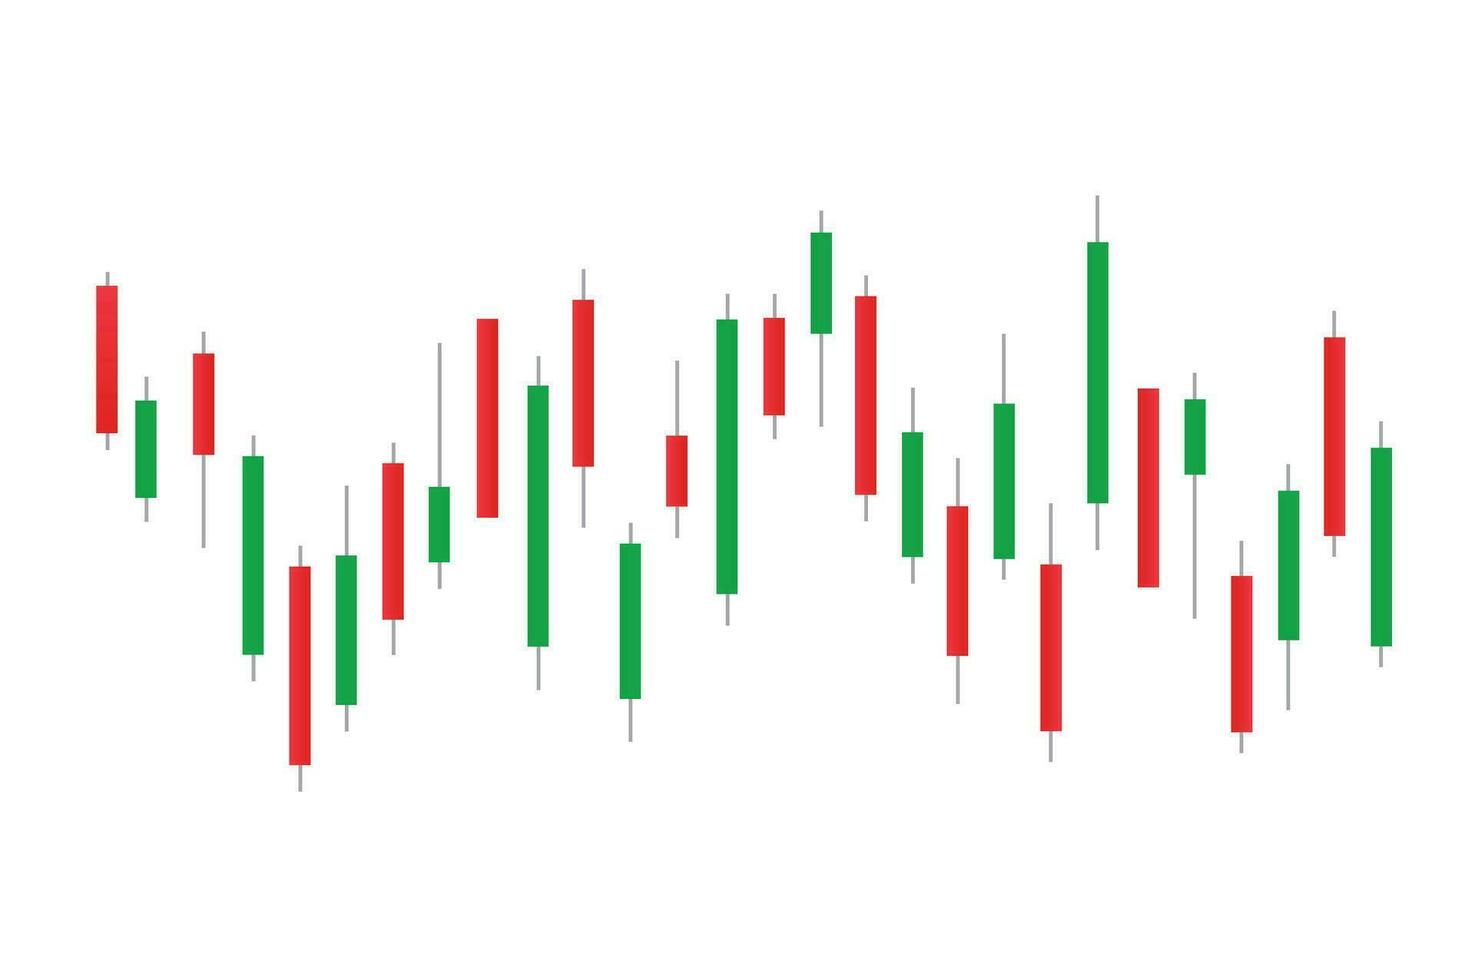 Stock market bar graph, candlestick chart, finance trade data, vector illustration.